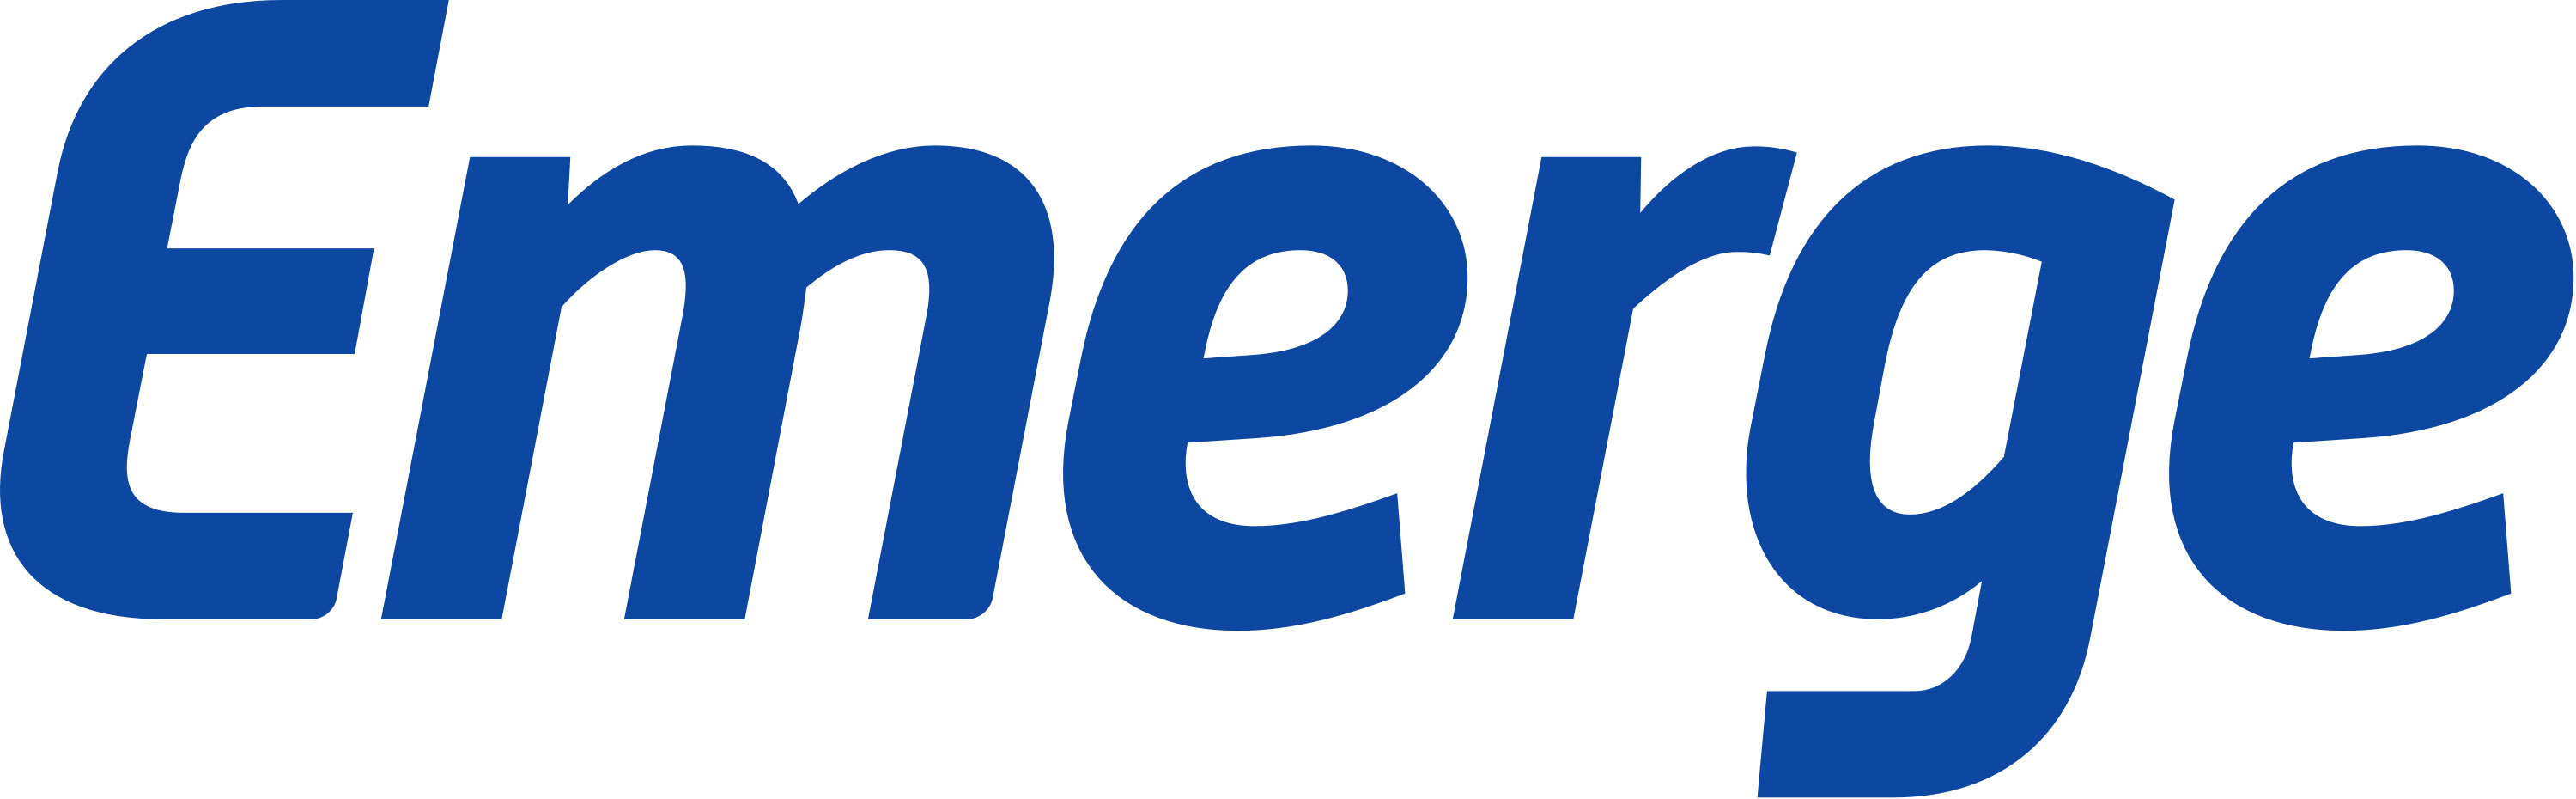 Emerge Company Logo